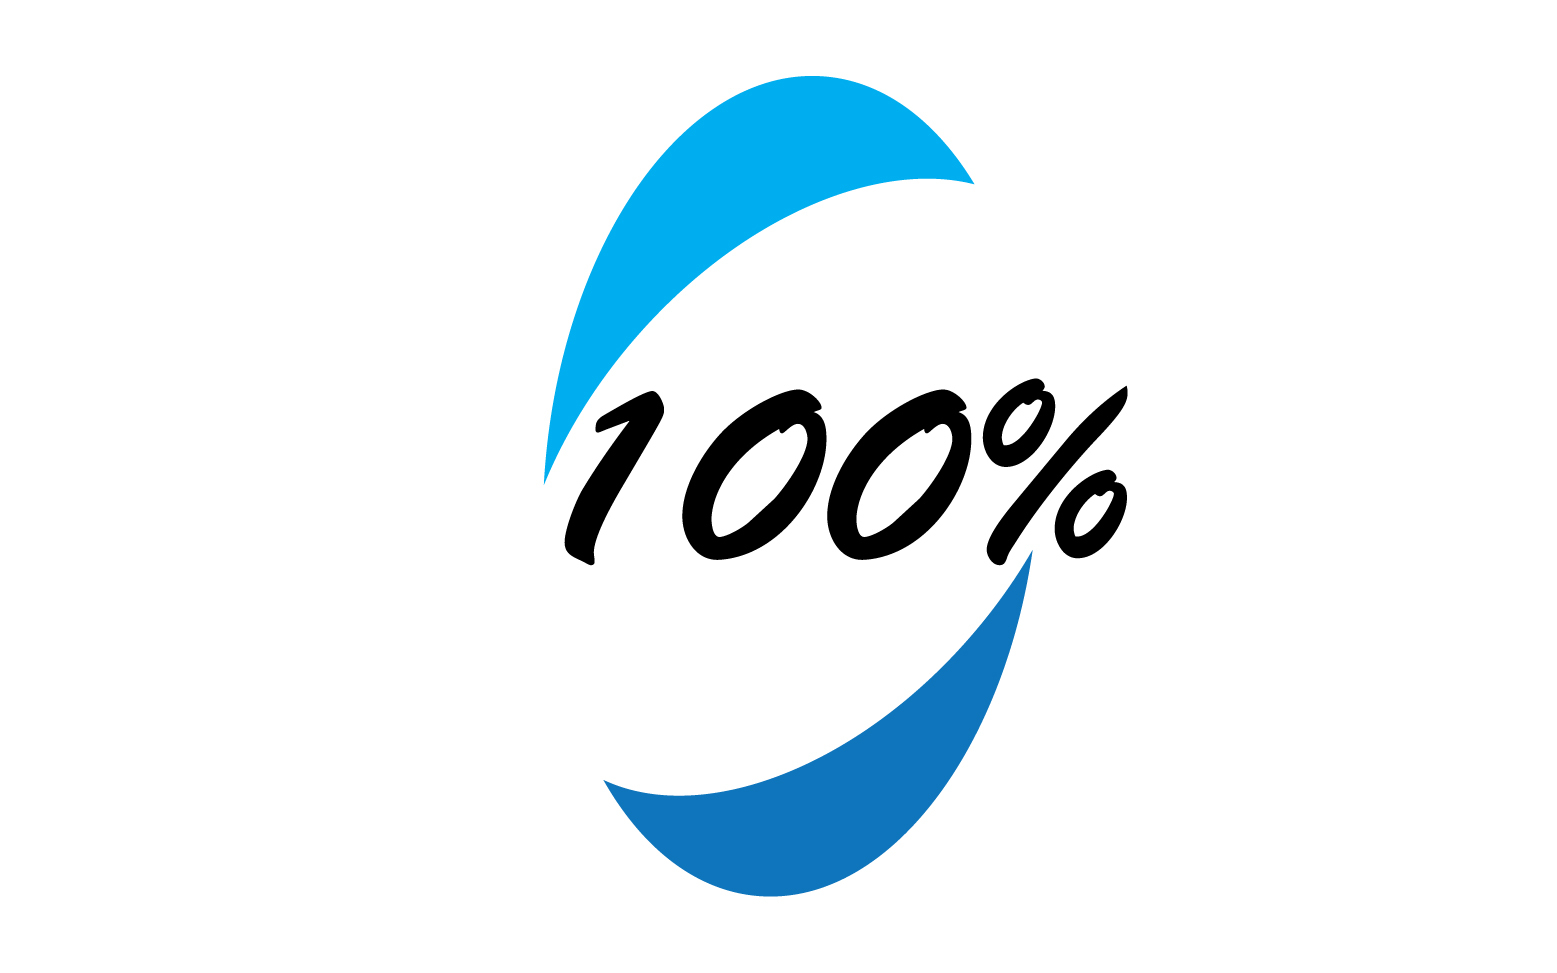 100 persent icon symbol logo version v27